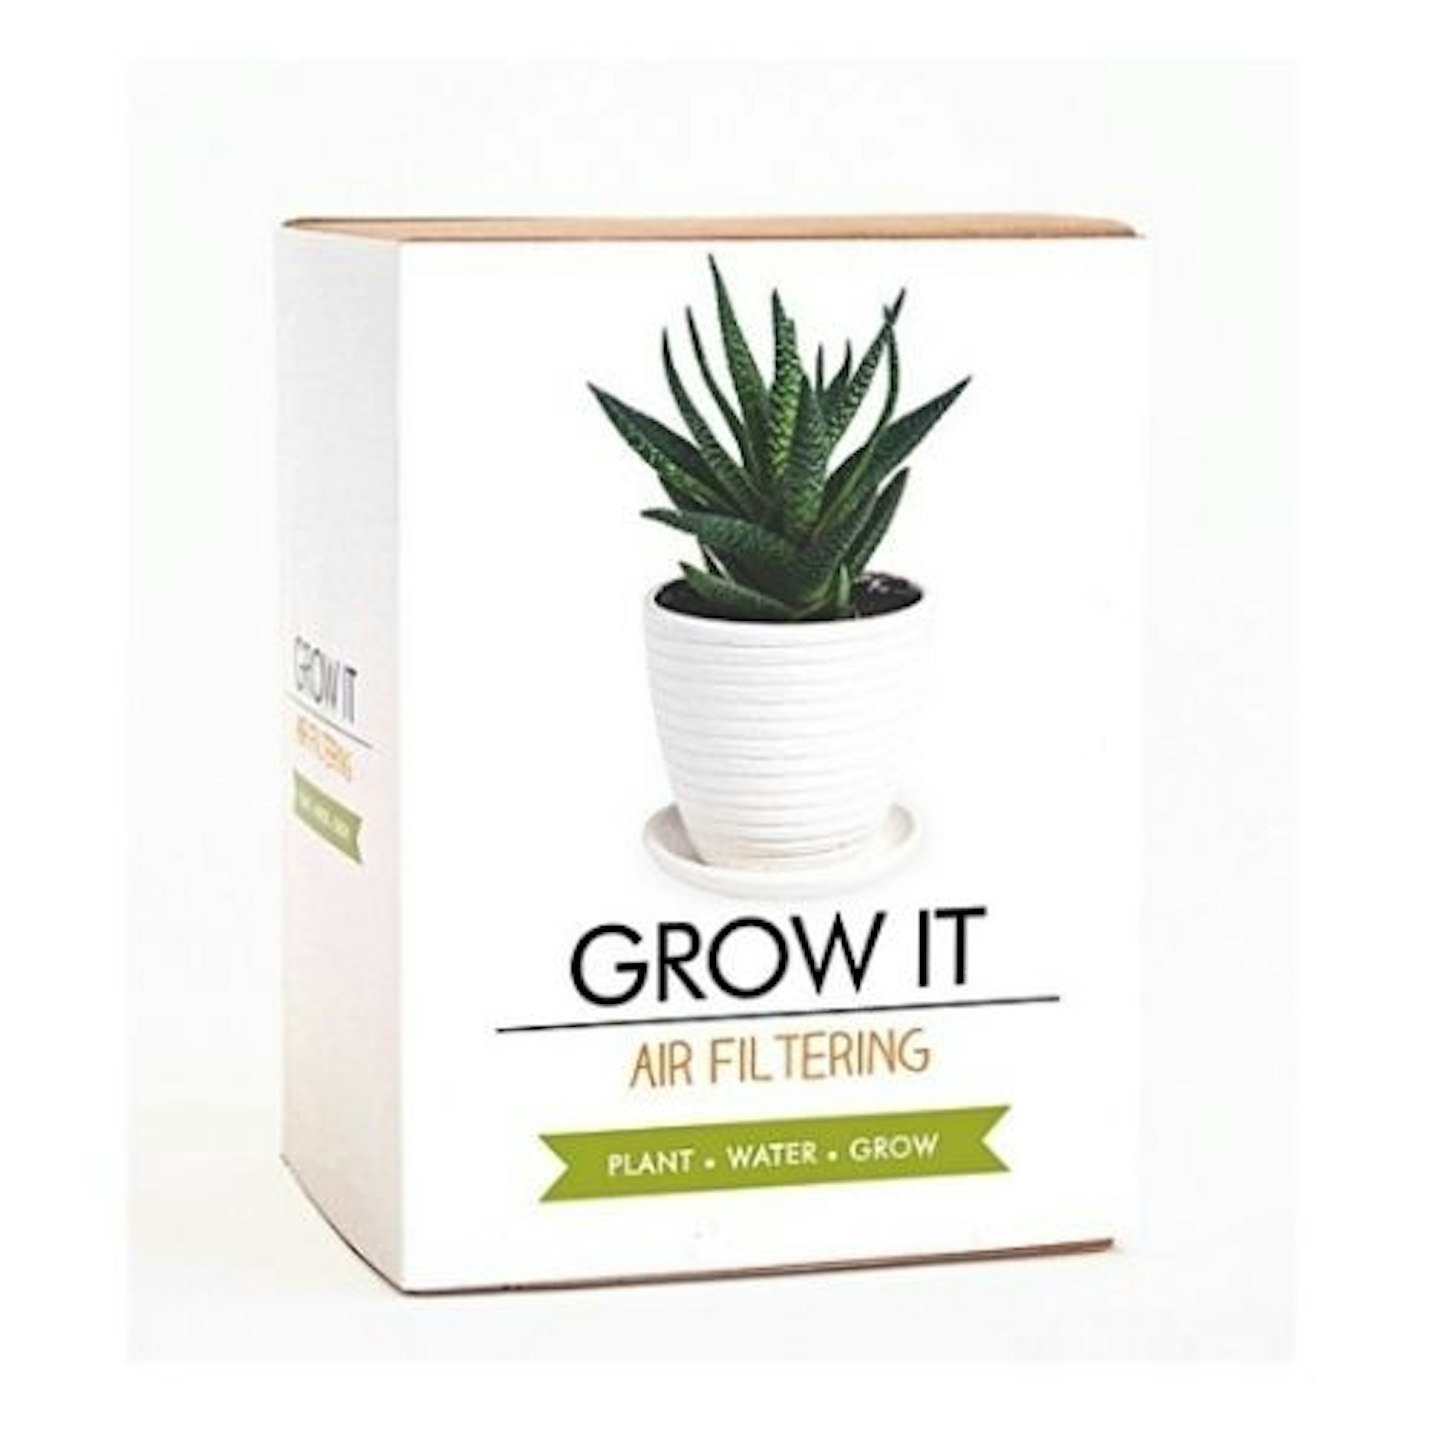 Grow It Air filtering seeds kit box